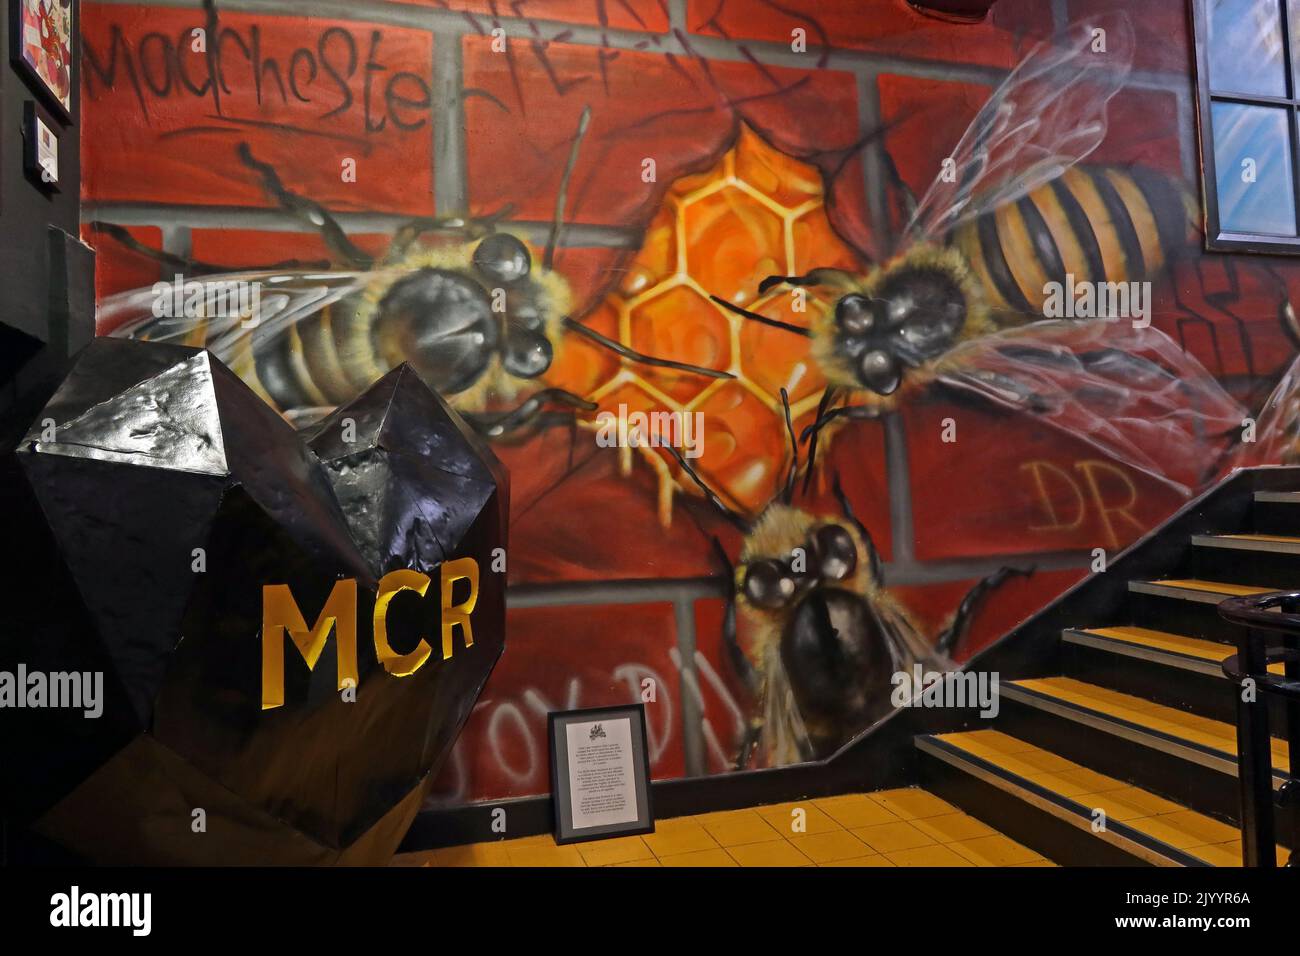 MCR bees, MCR heart, by Lazerian aka Liam Hopkins, at Afflecks Palace , 52 Church St, Manchester , England, UK, M4 1PW Stock Photo